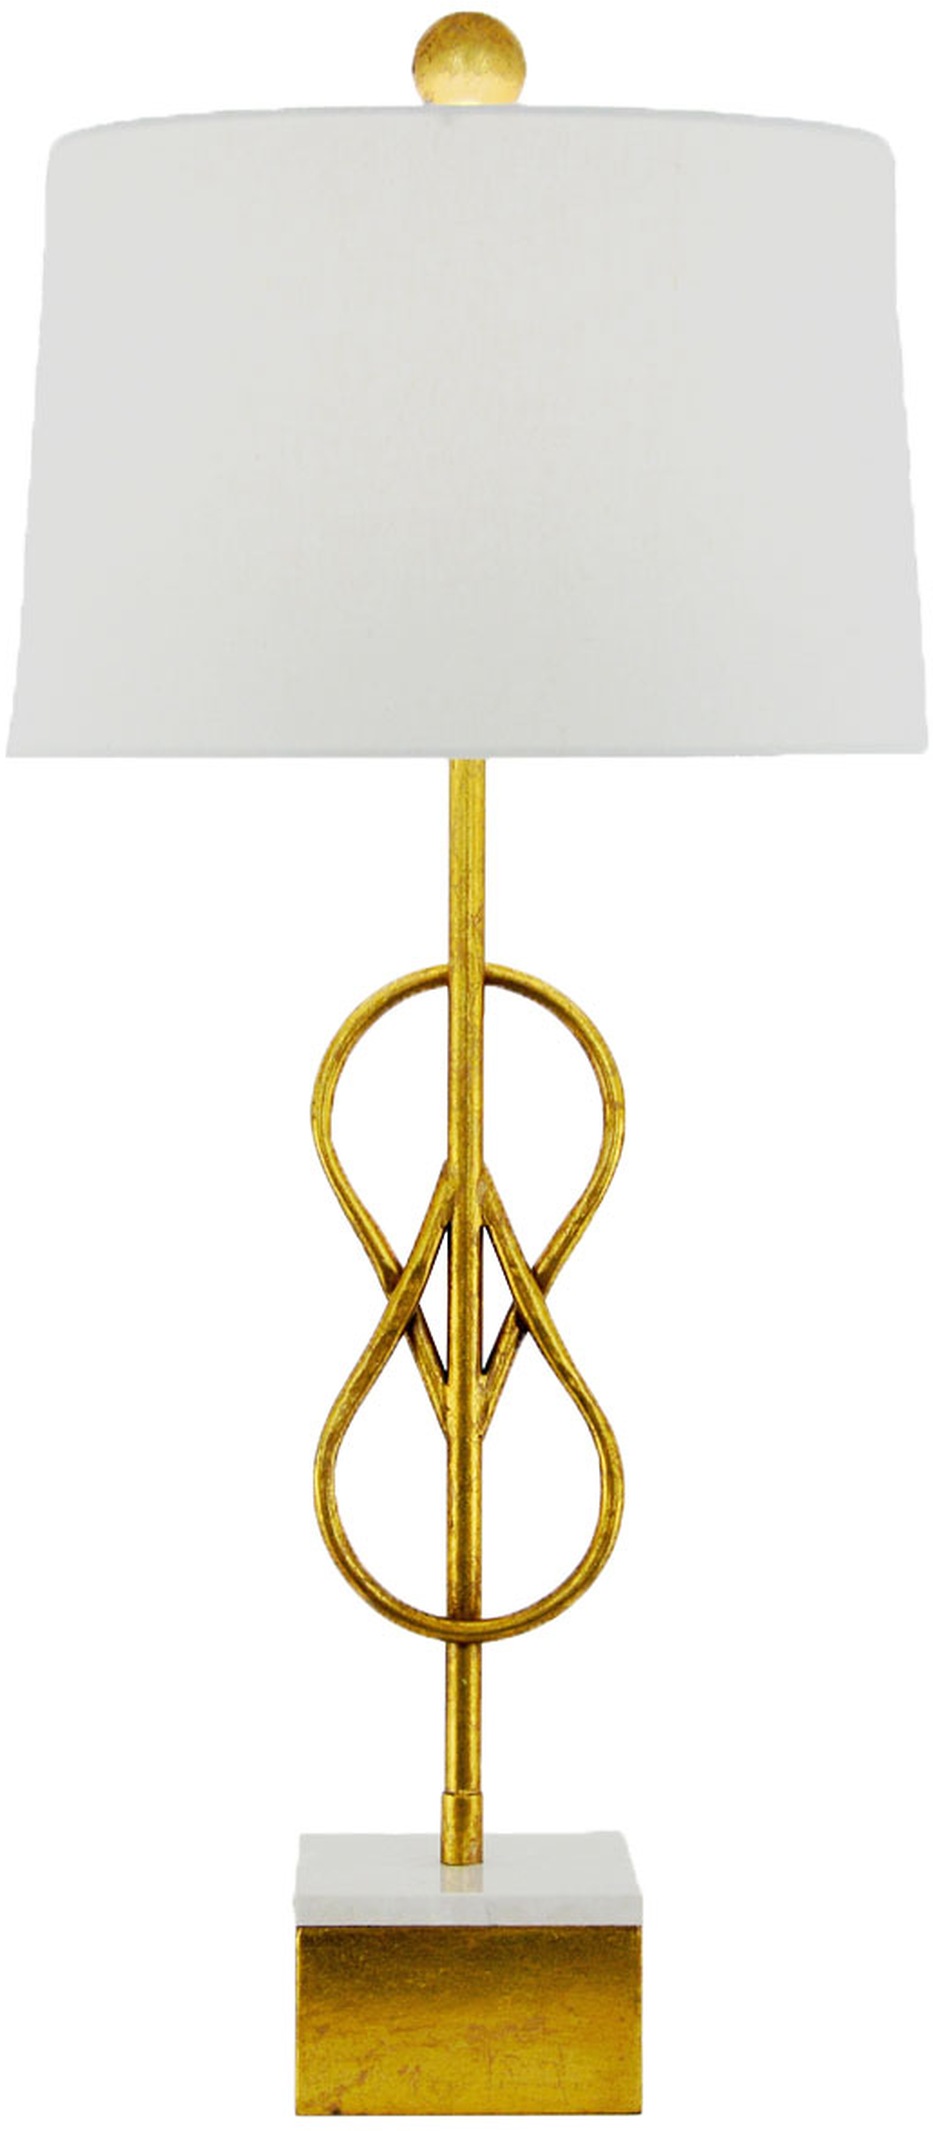 Zeugma Imports® Gold Table Lamp